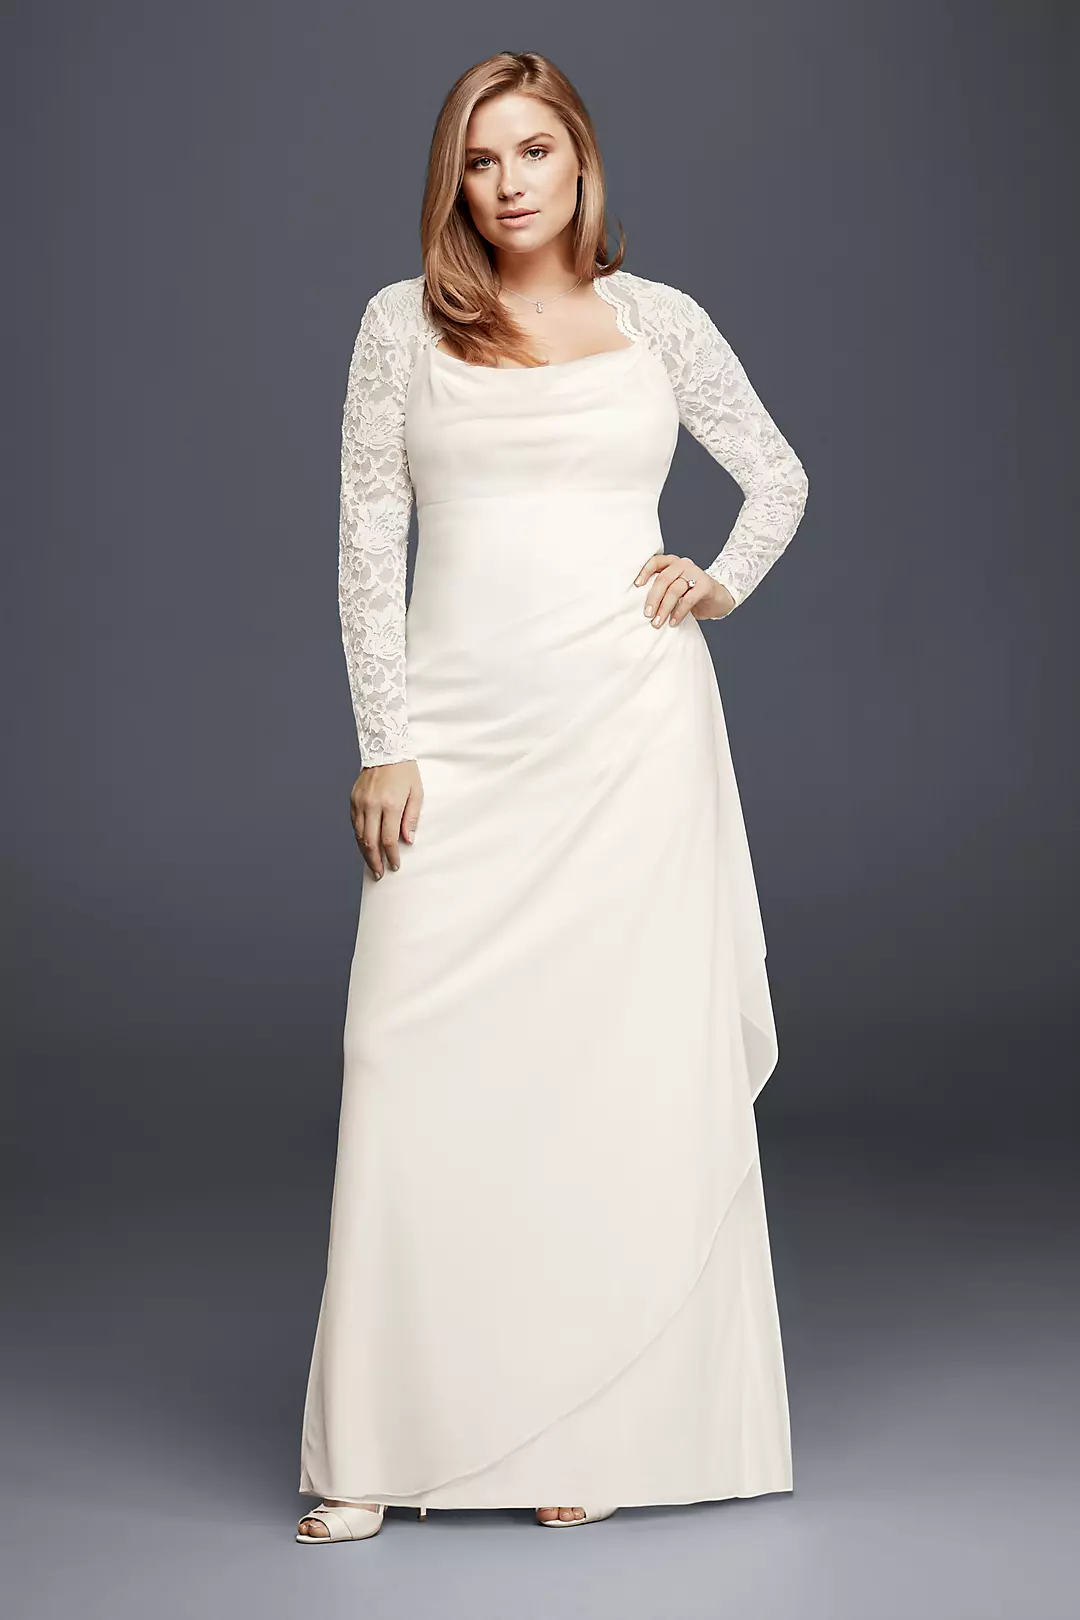 Lace Cap Sleeve Long Mesh Wedding Dress Image